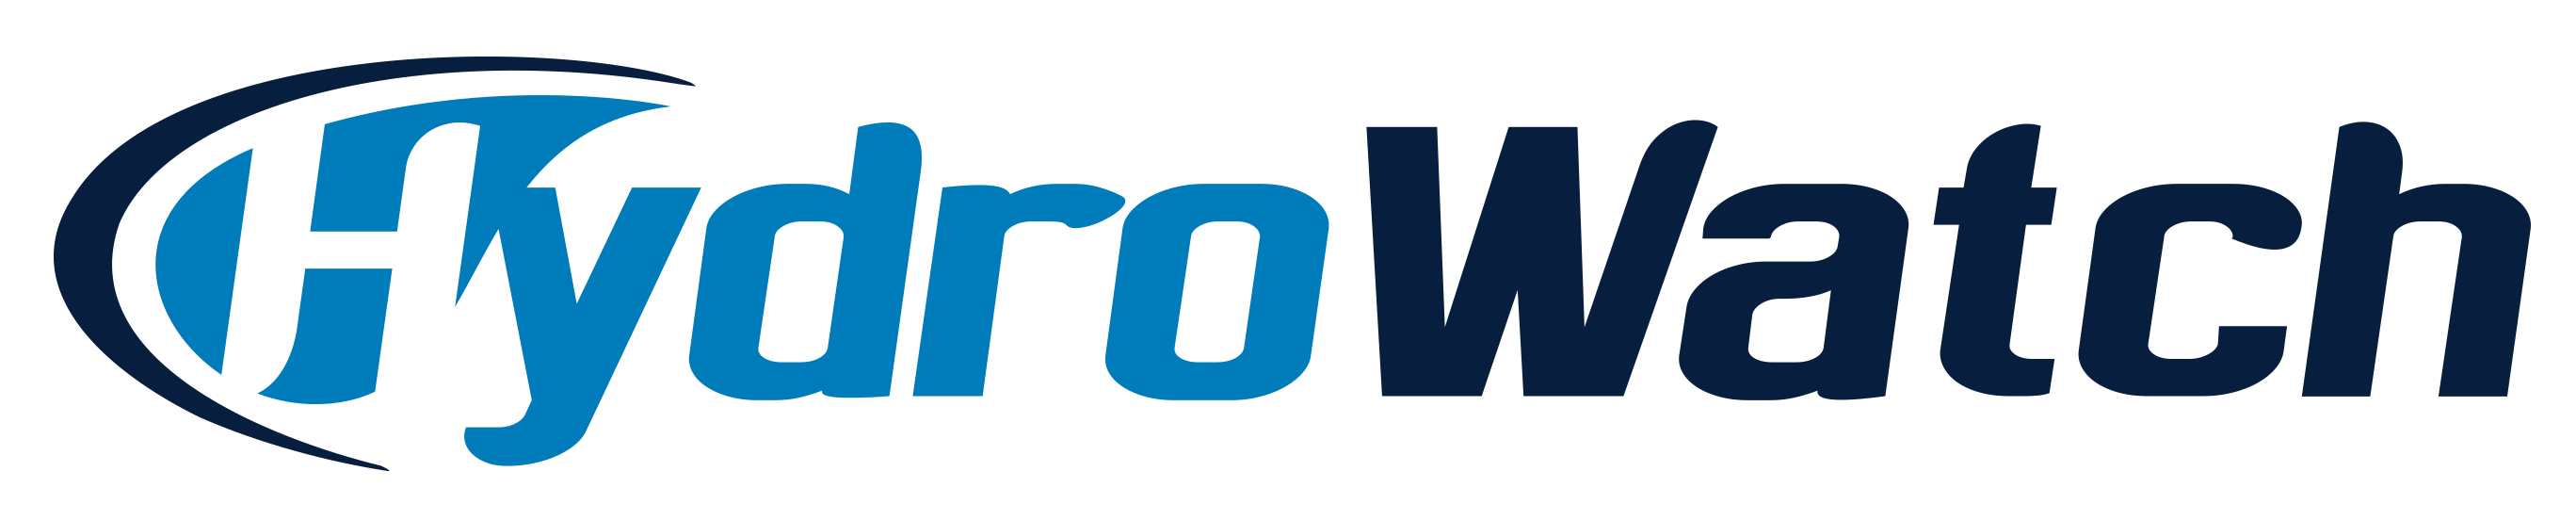 Hydrowatch_logo.png